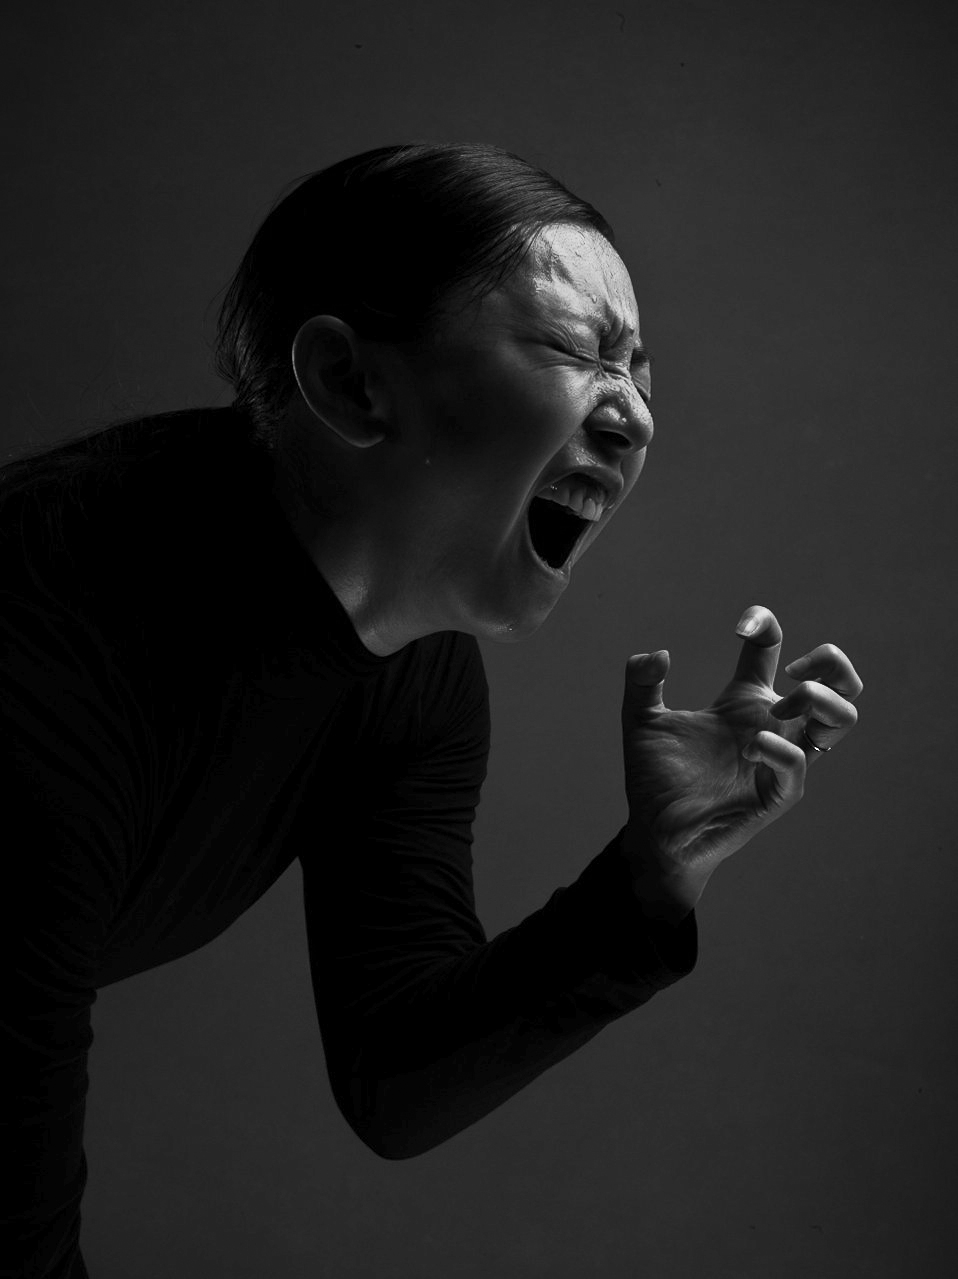 Maiko Ikegaki in Tres Mort - Tremor at Howl Happening for Vangeline Theater in 2015. Photo by Celeste Sloman.